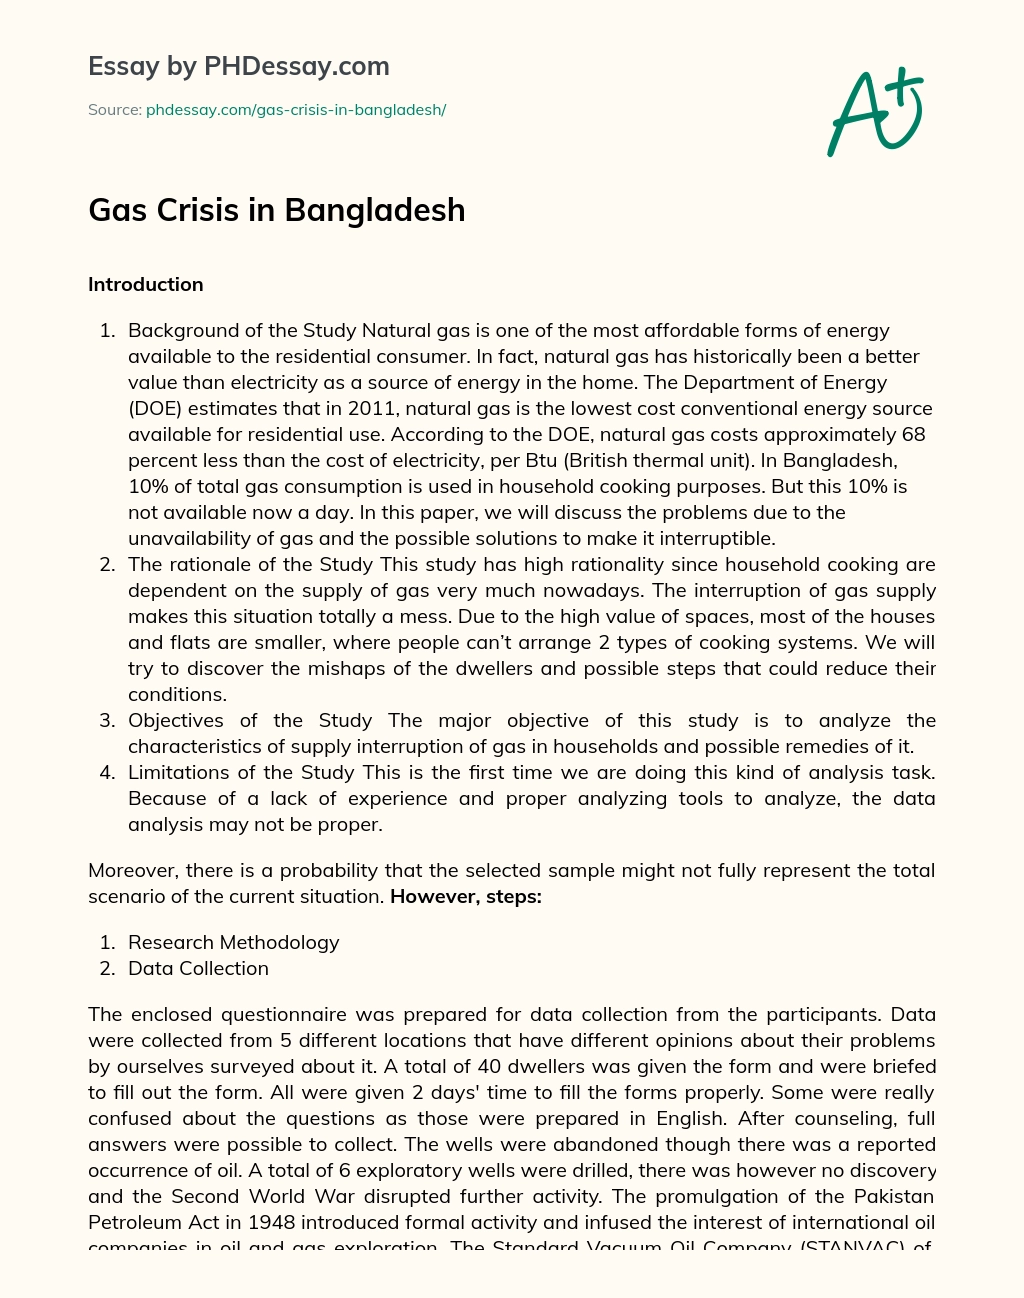 Gas Crisis in Bangladesh essay